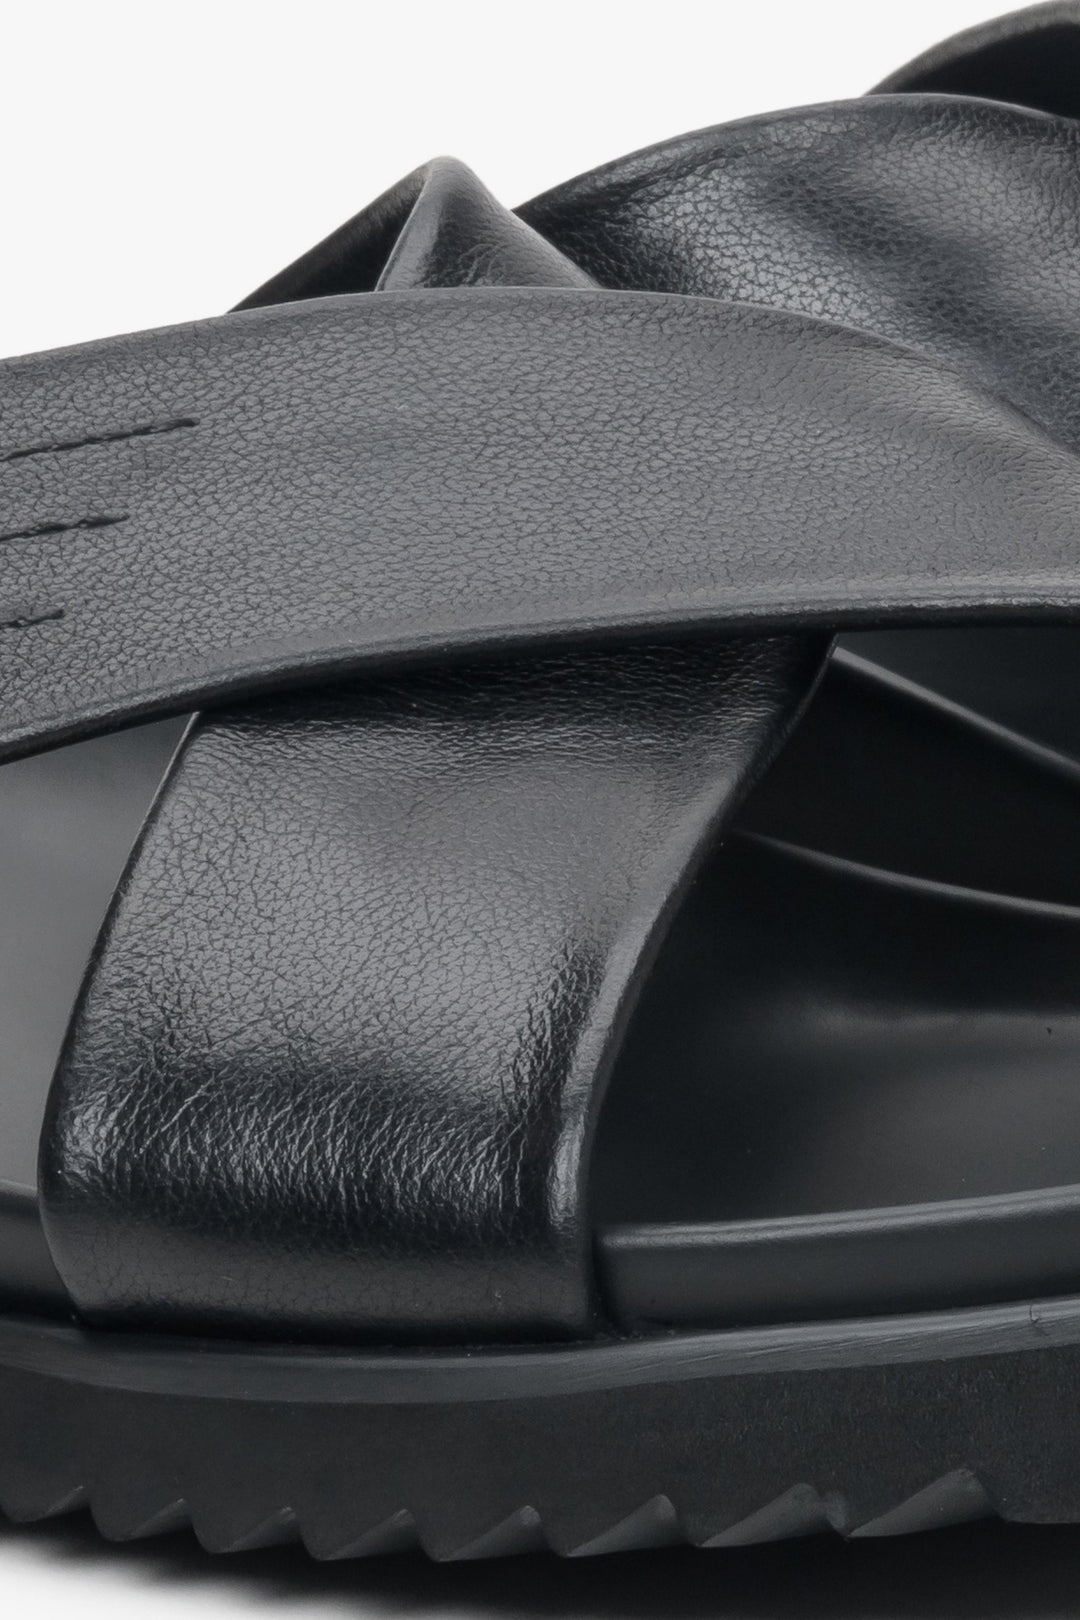 Men's black leather  sandals by Estro - close-up on the details.